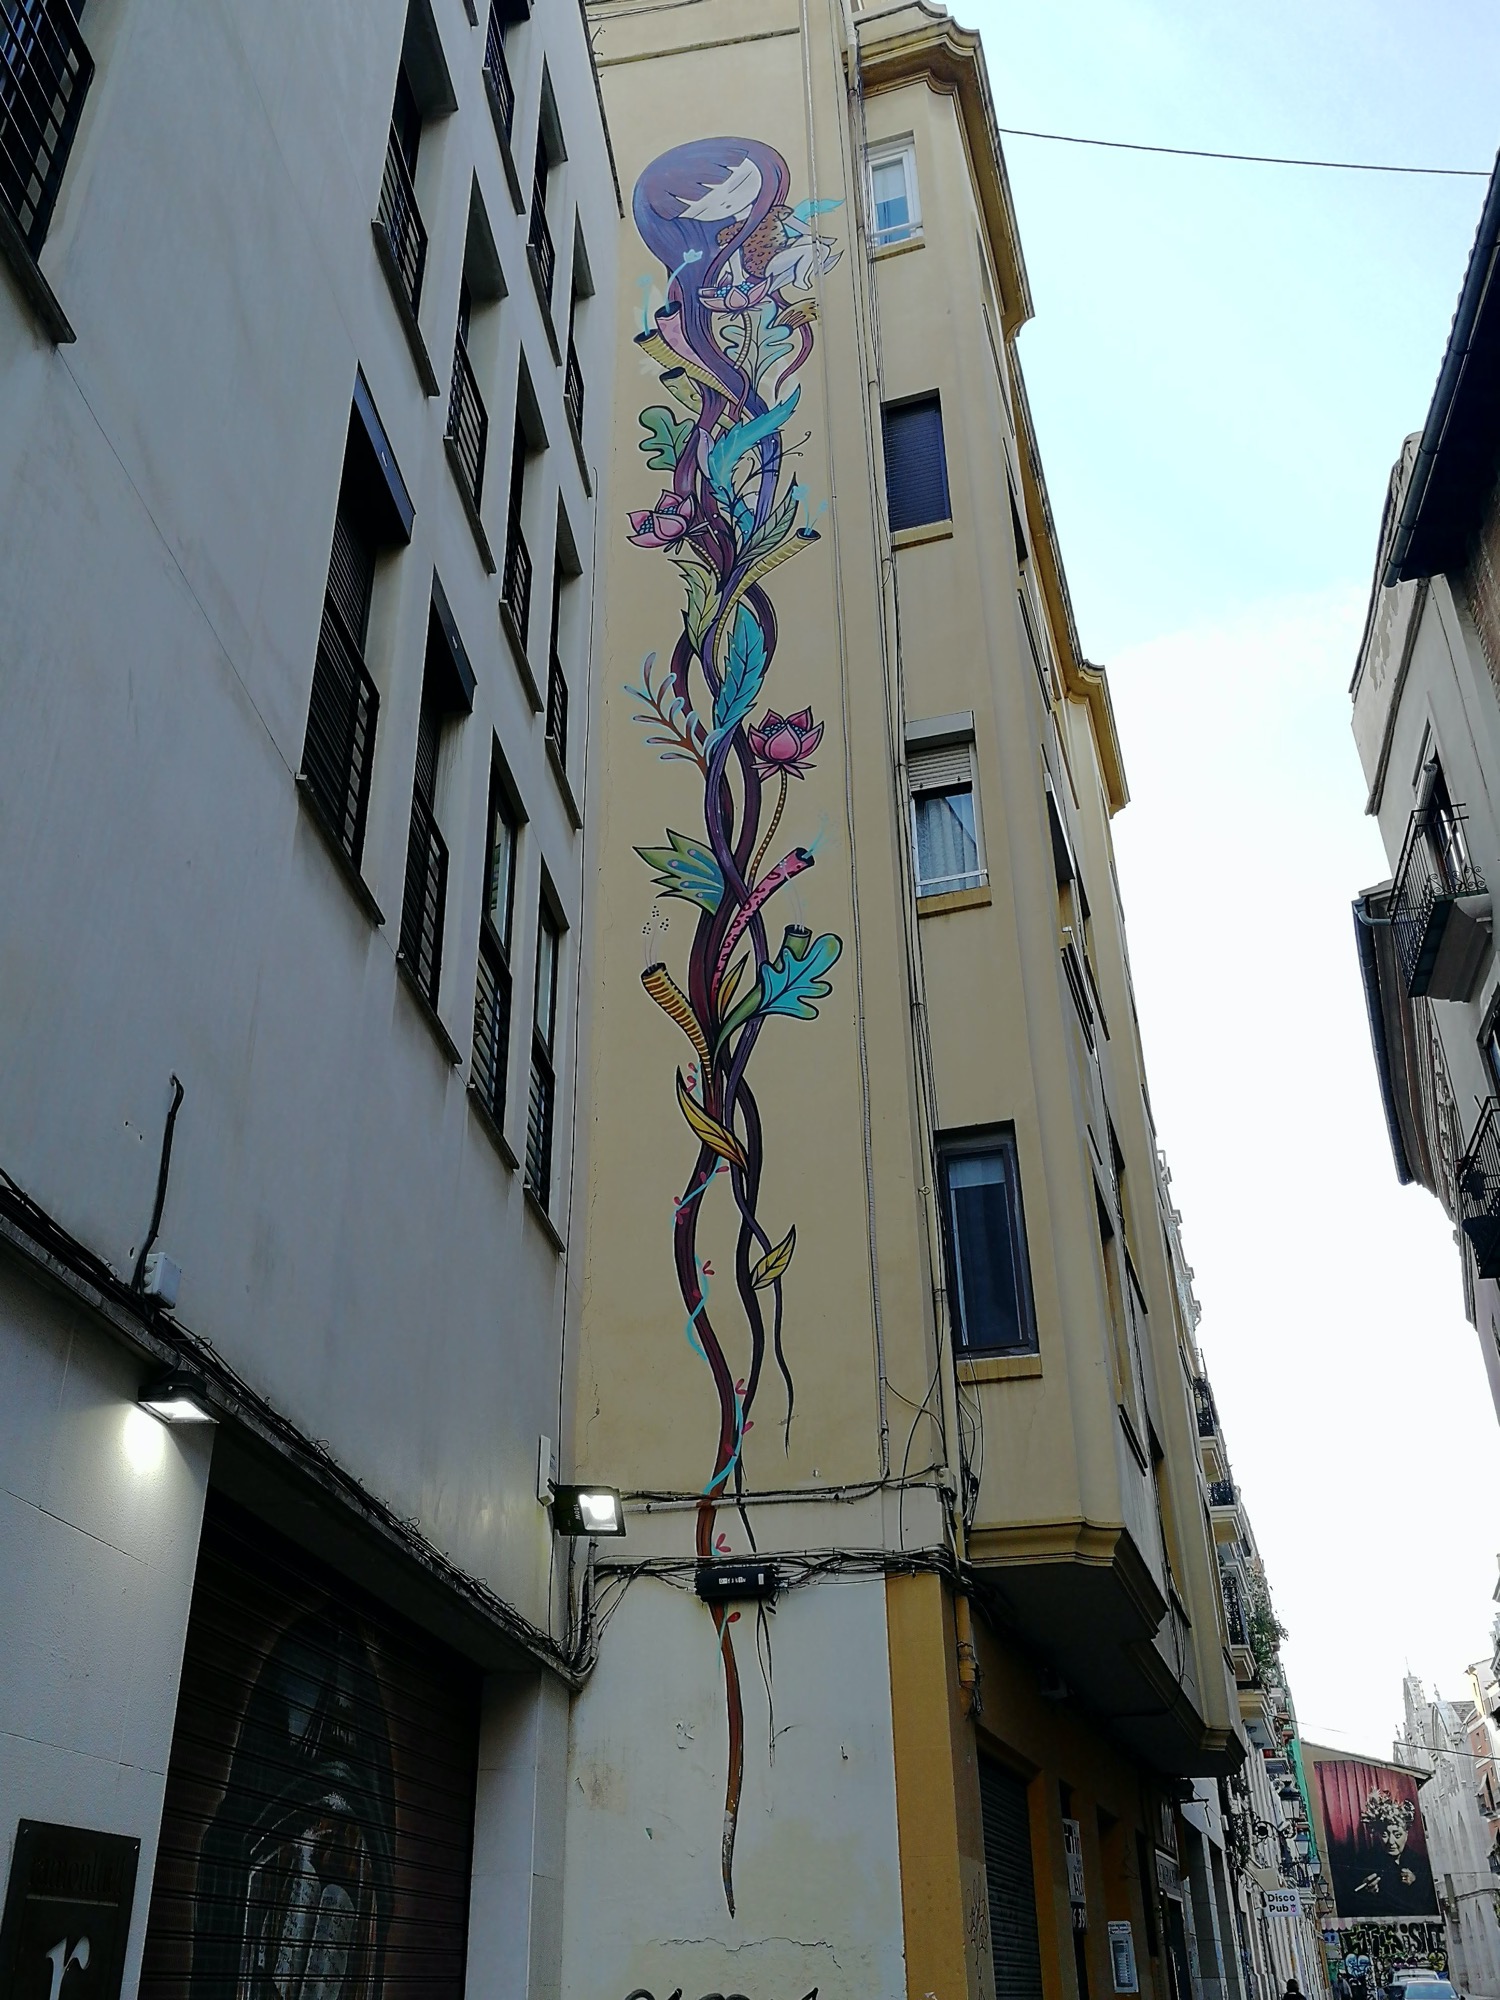 Graffiti 3700  by the artist Julieta xlf captured by Rabot in València Spain